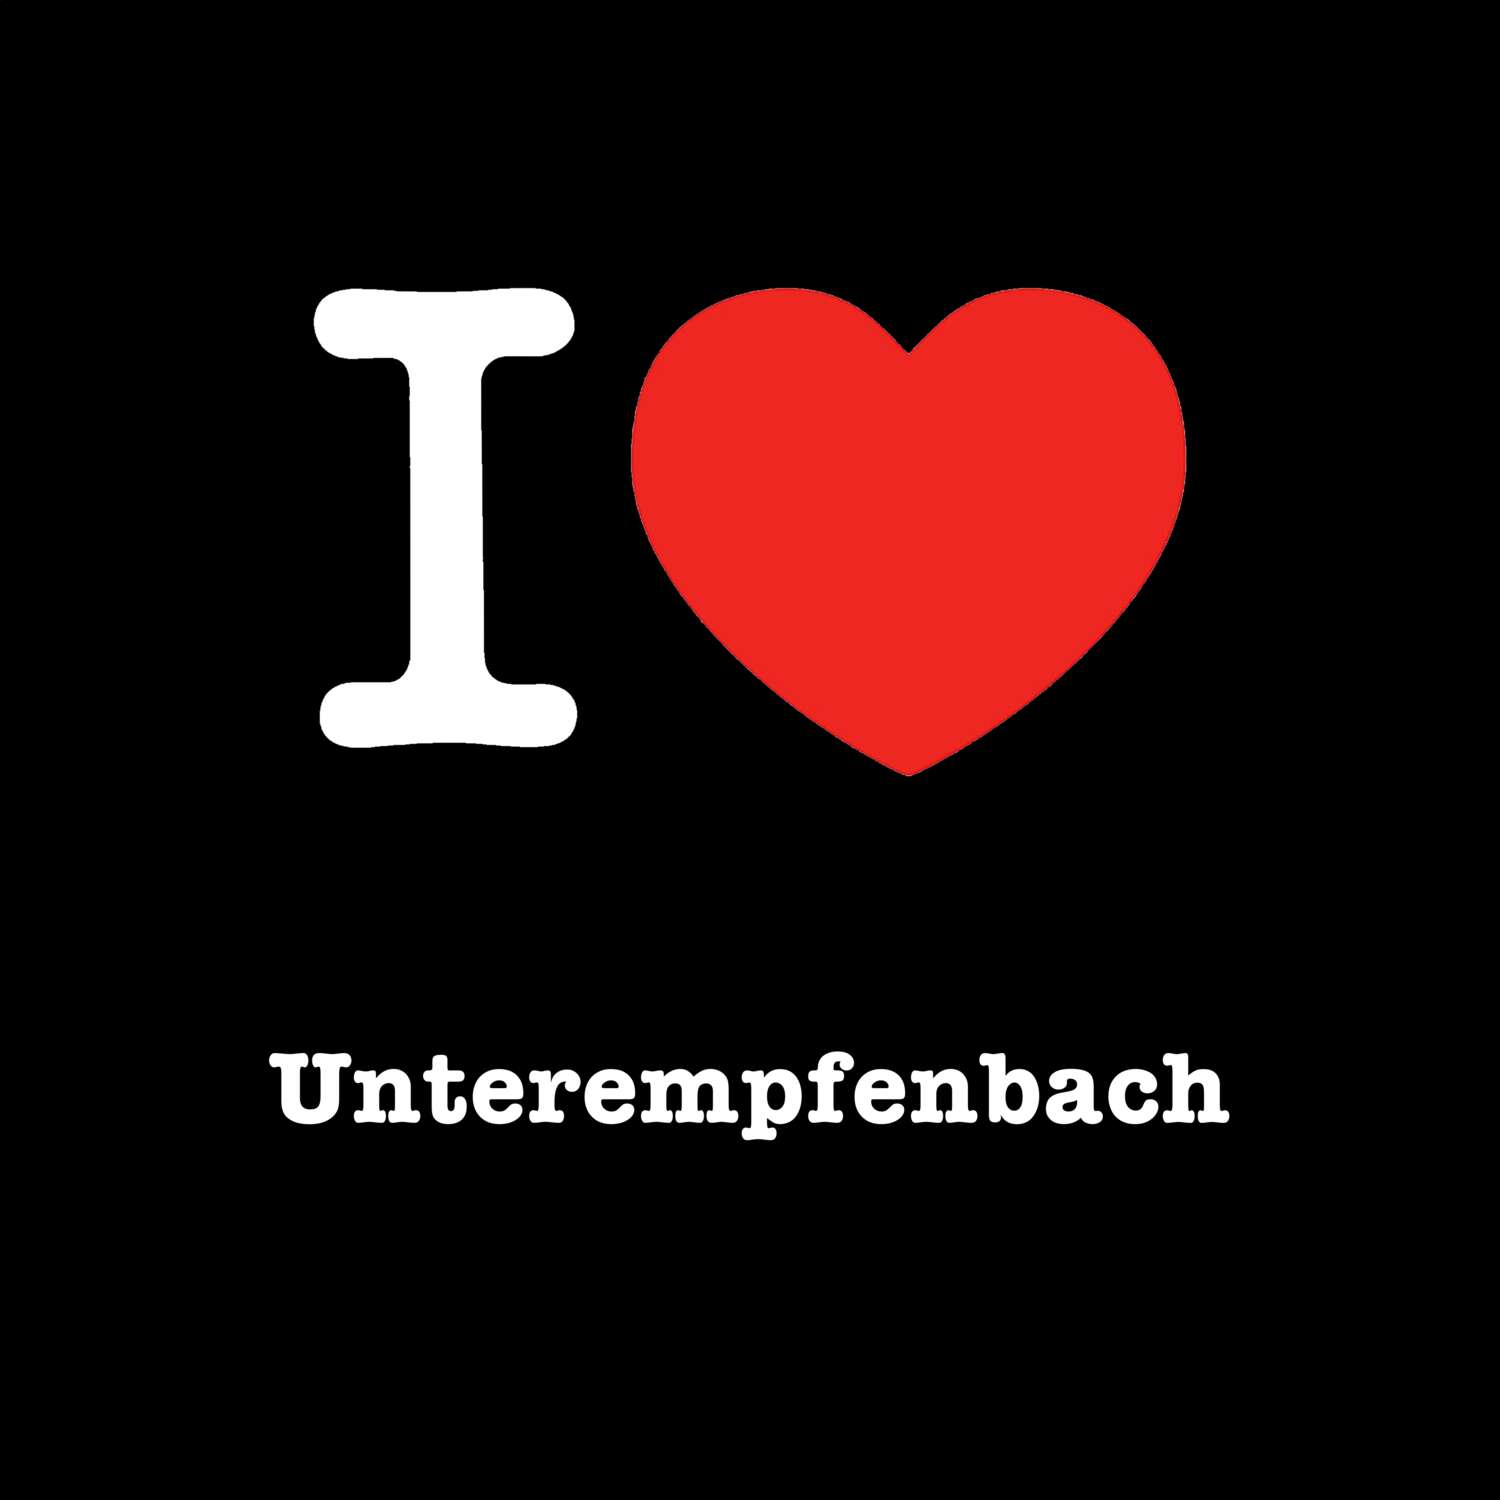 Unterempfenbach T-Shirt »I love«